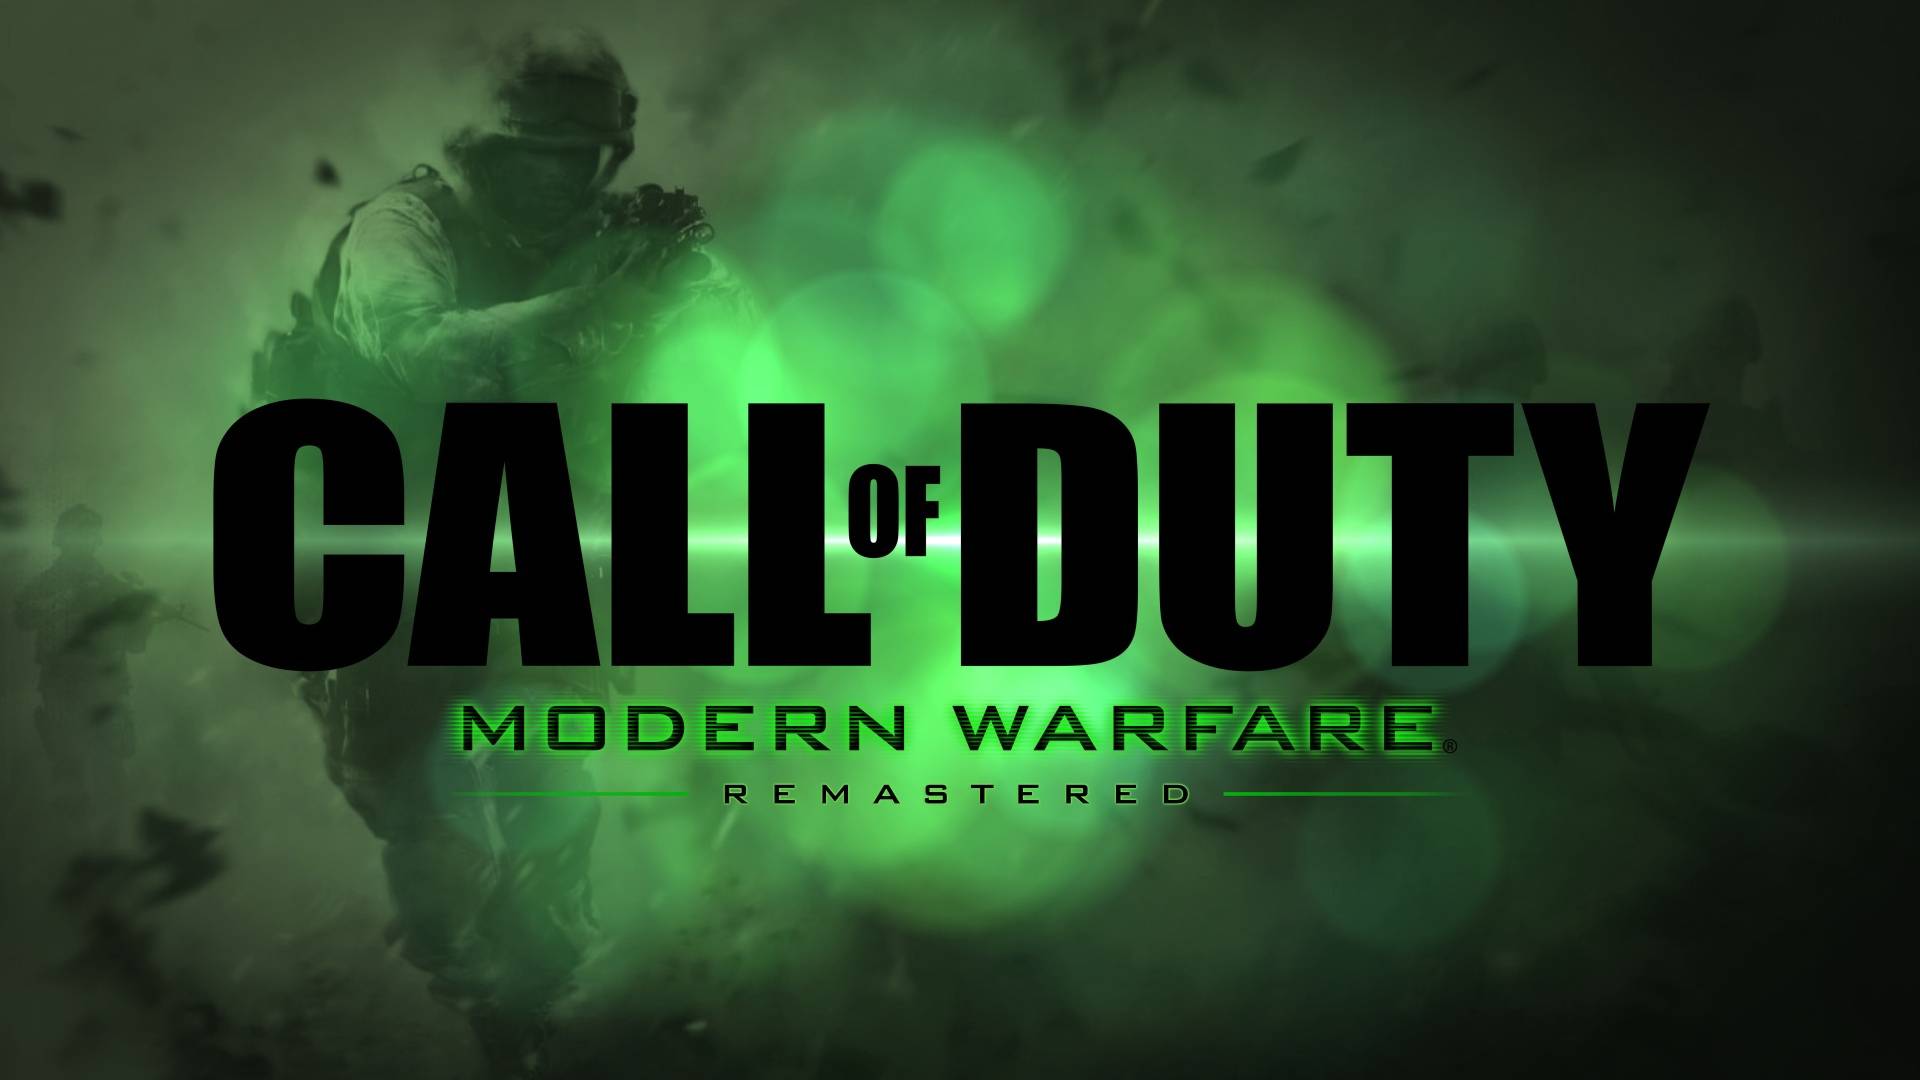 Call of Duty Modern Warfare Remastered (3 часть)